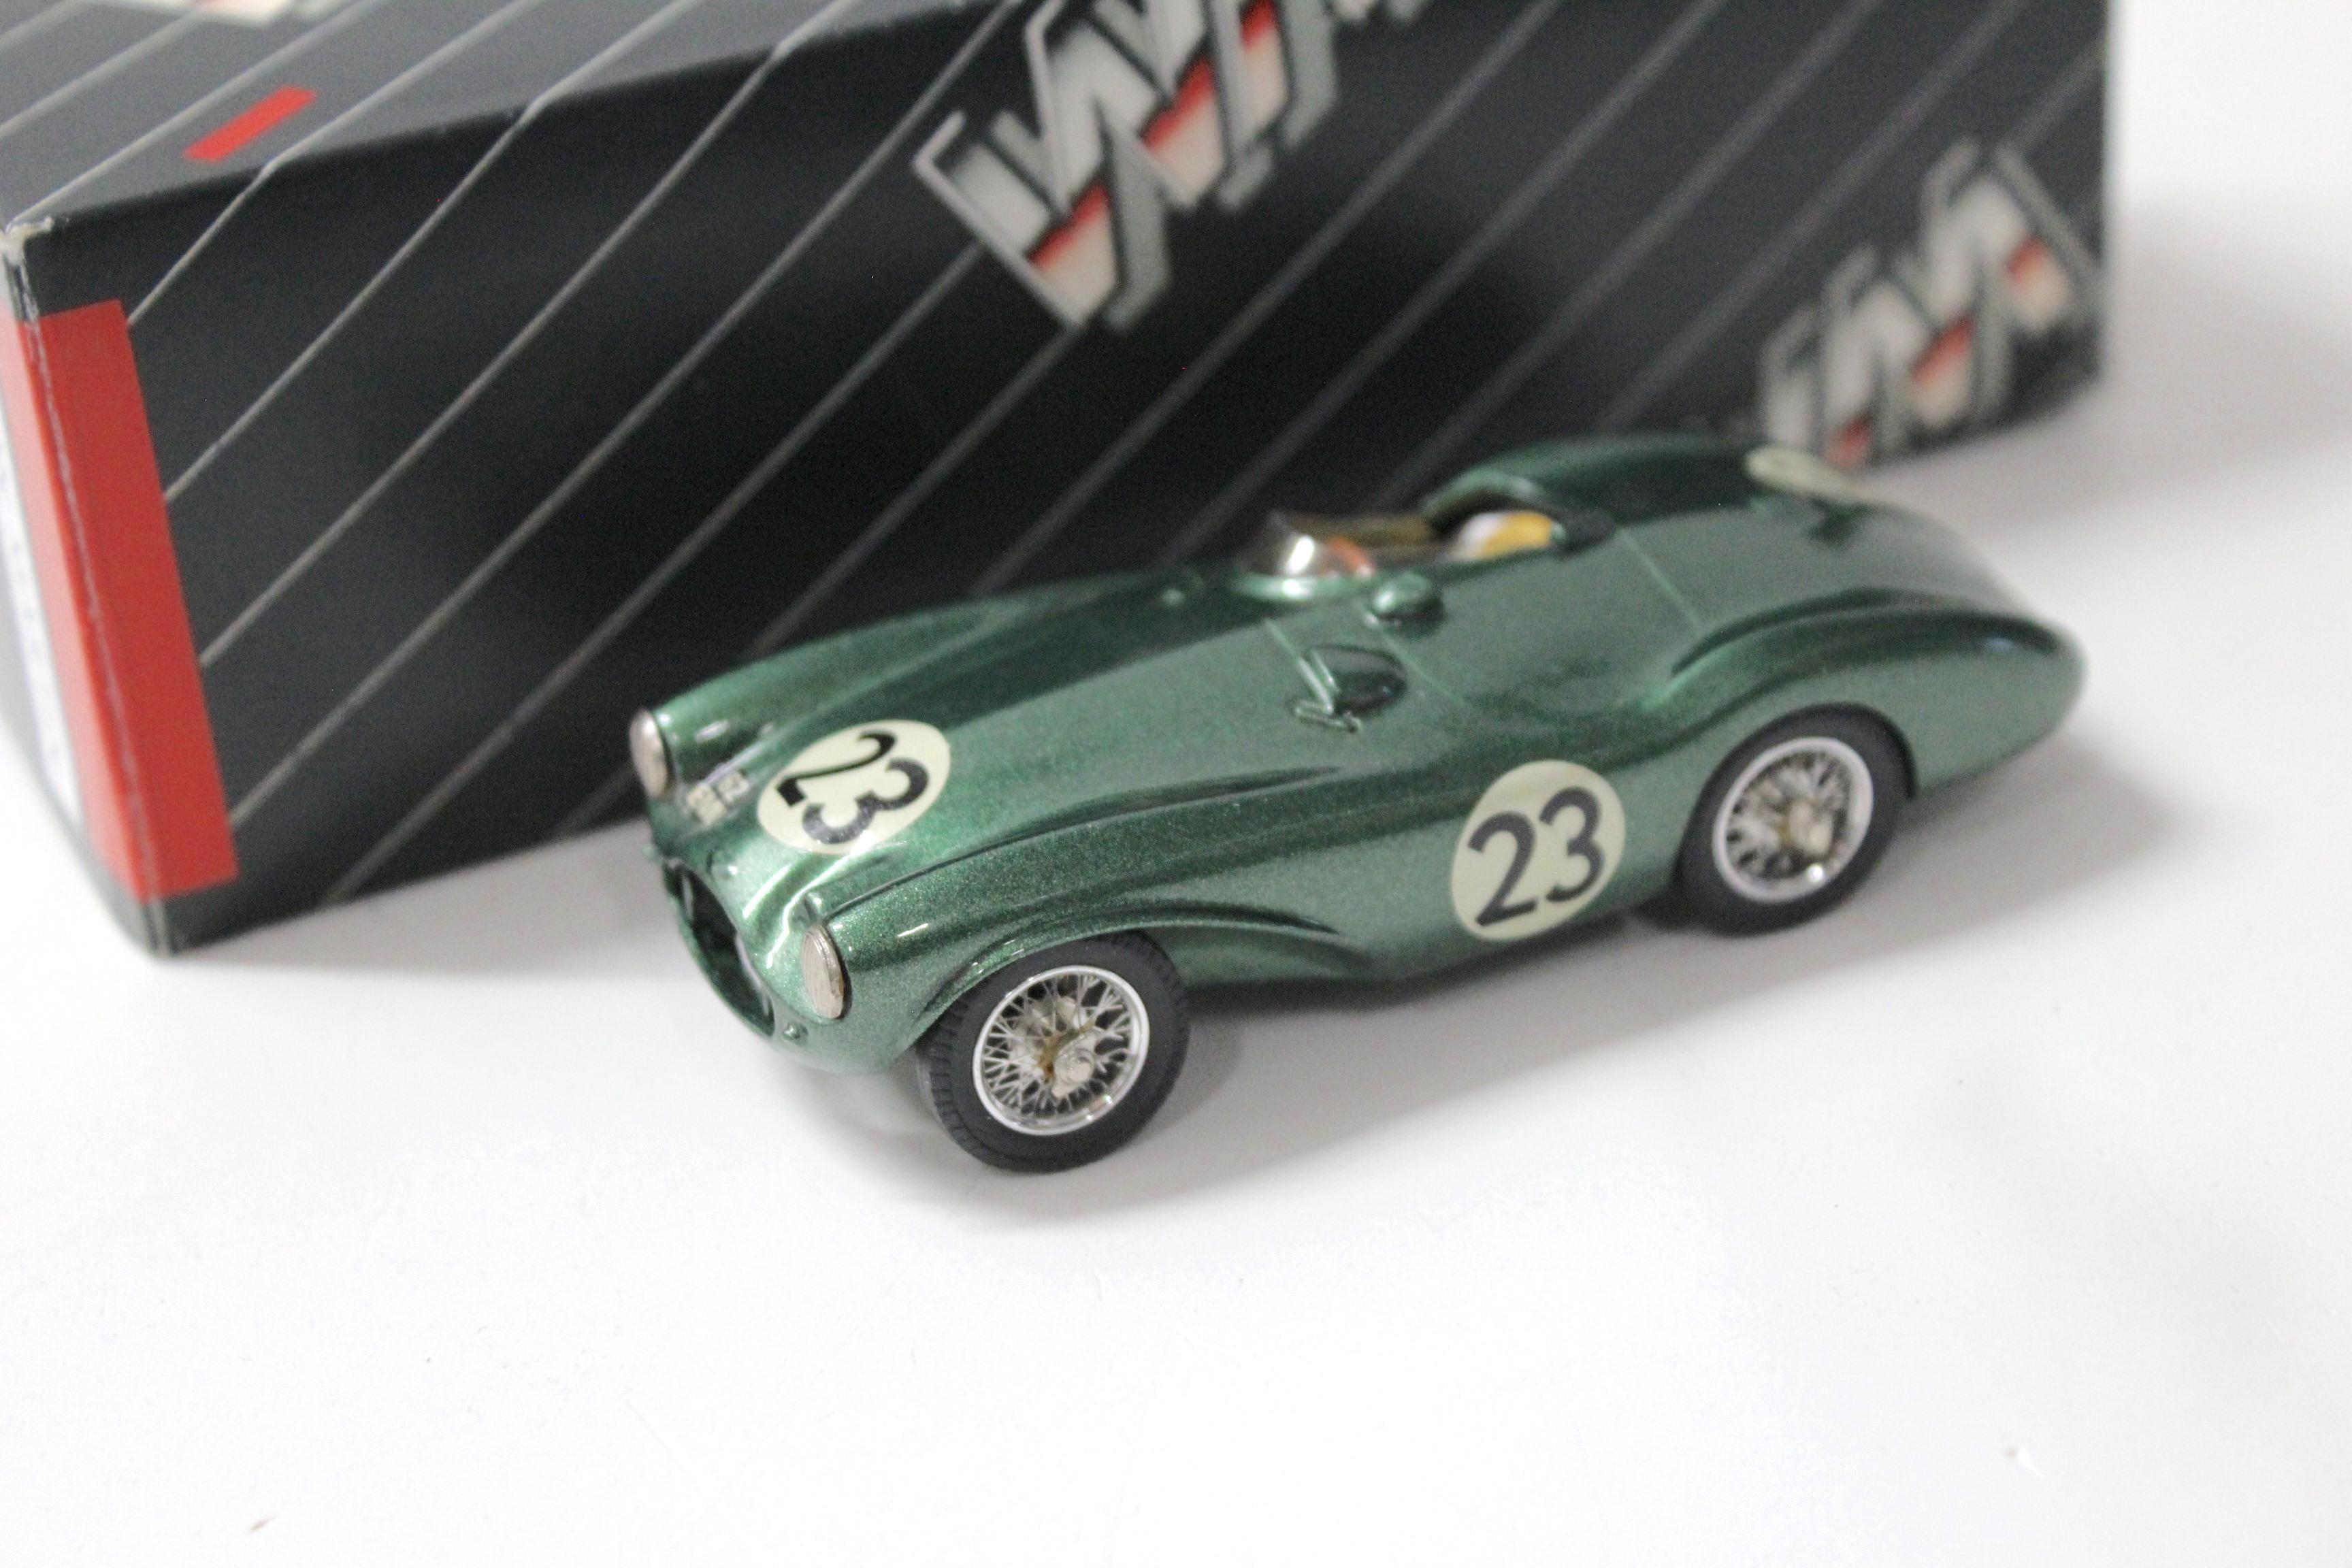 1:43 Western Models 1964 Aston Martin DB3 S green #23